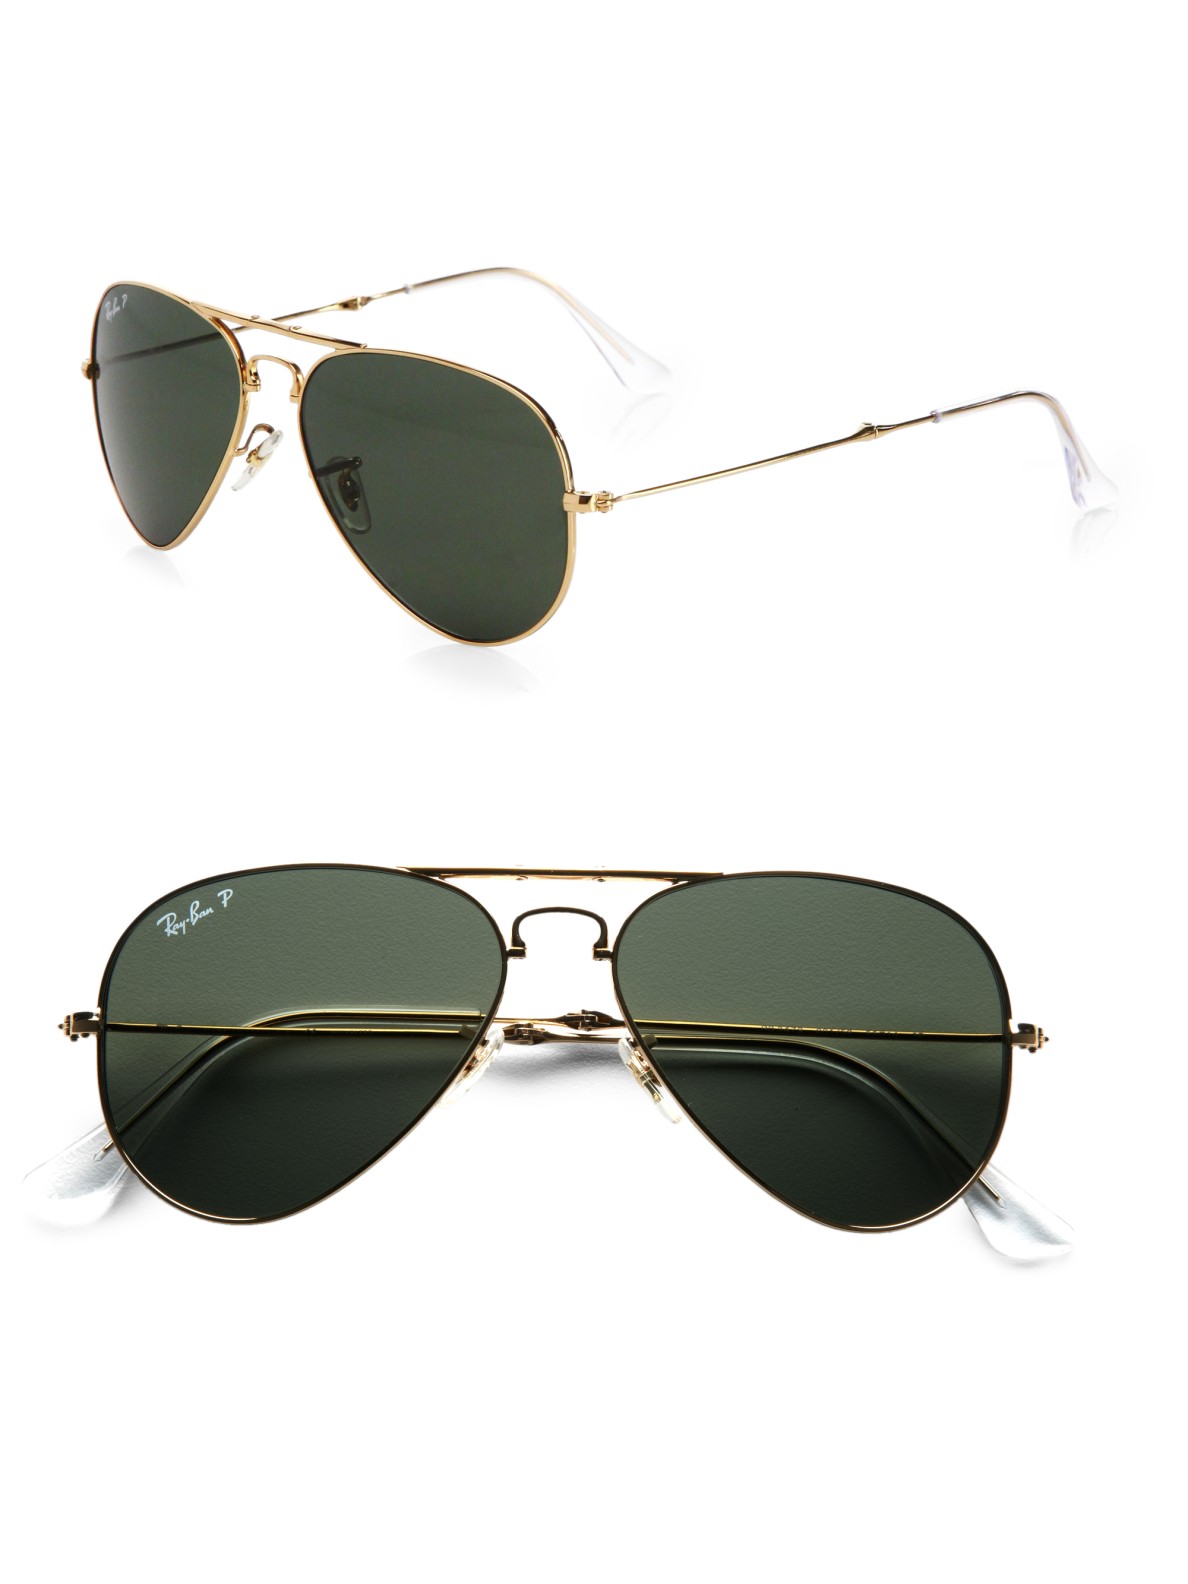 Lyst - Ray-Ban Original Polarized Aviator Sunglasses in Green